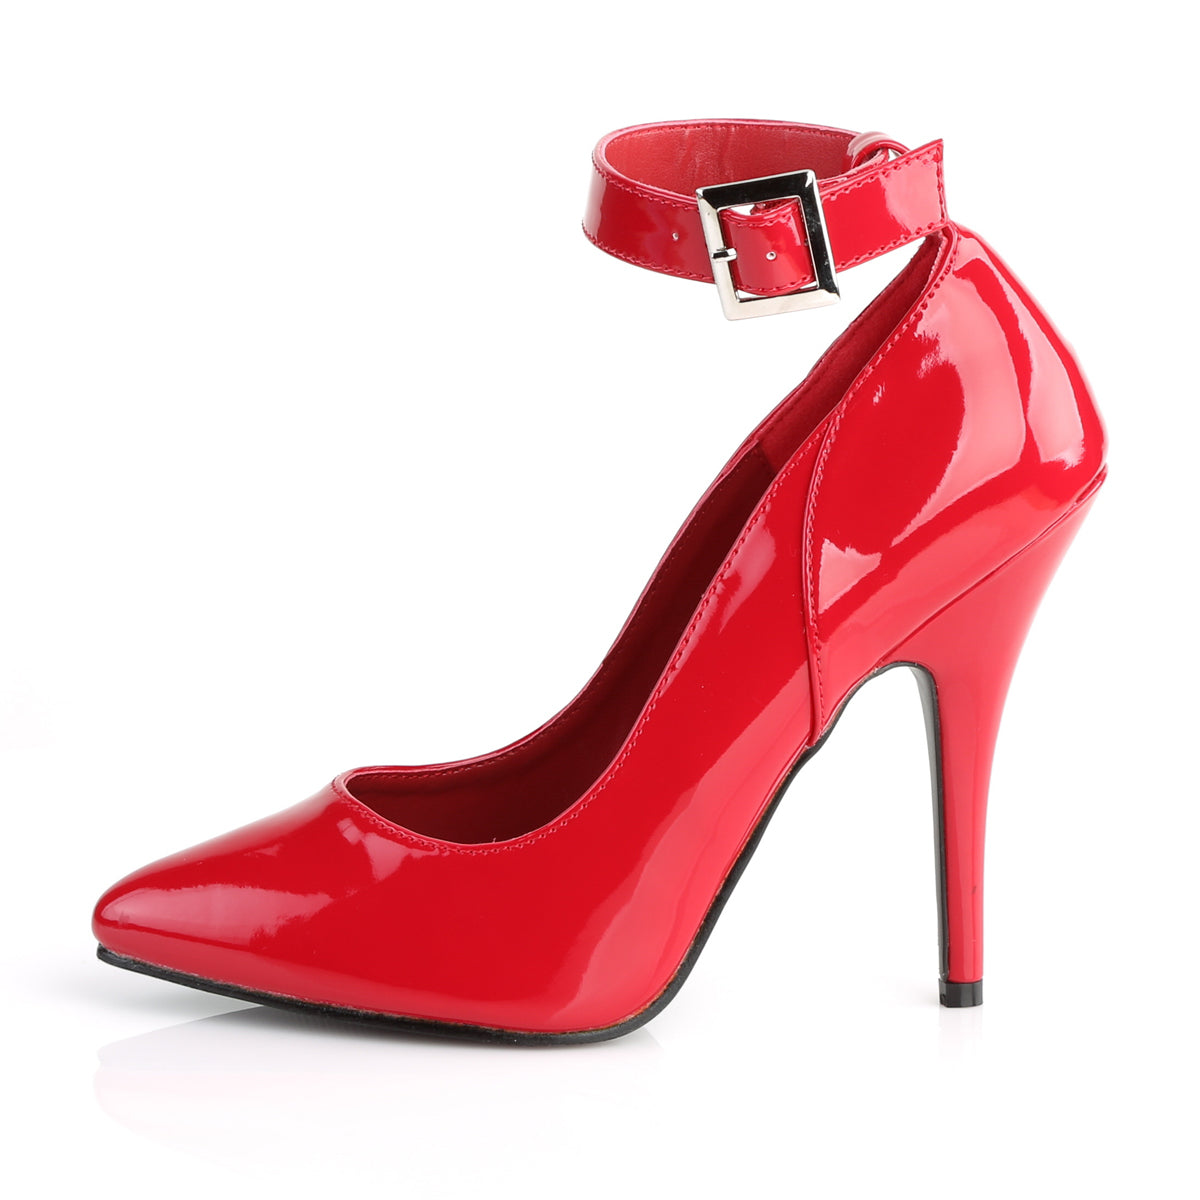 SEDUCE-431 Pleaser Sexy Shoe 5 Inch Heel Red Fetish Footwear-Pleaser- Sexy Shoes Pole Dance Heels